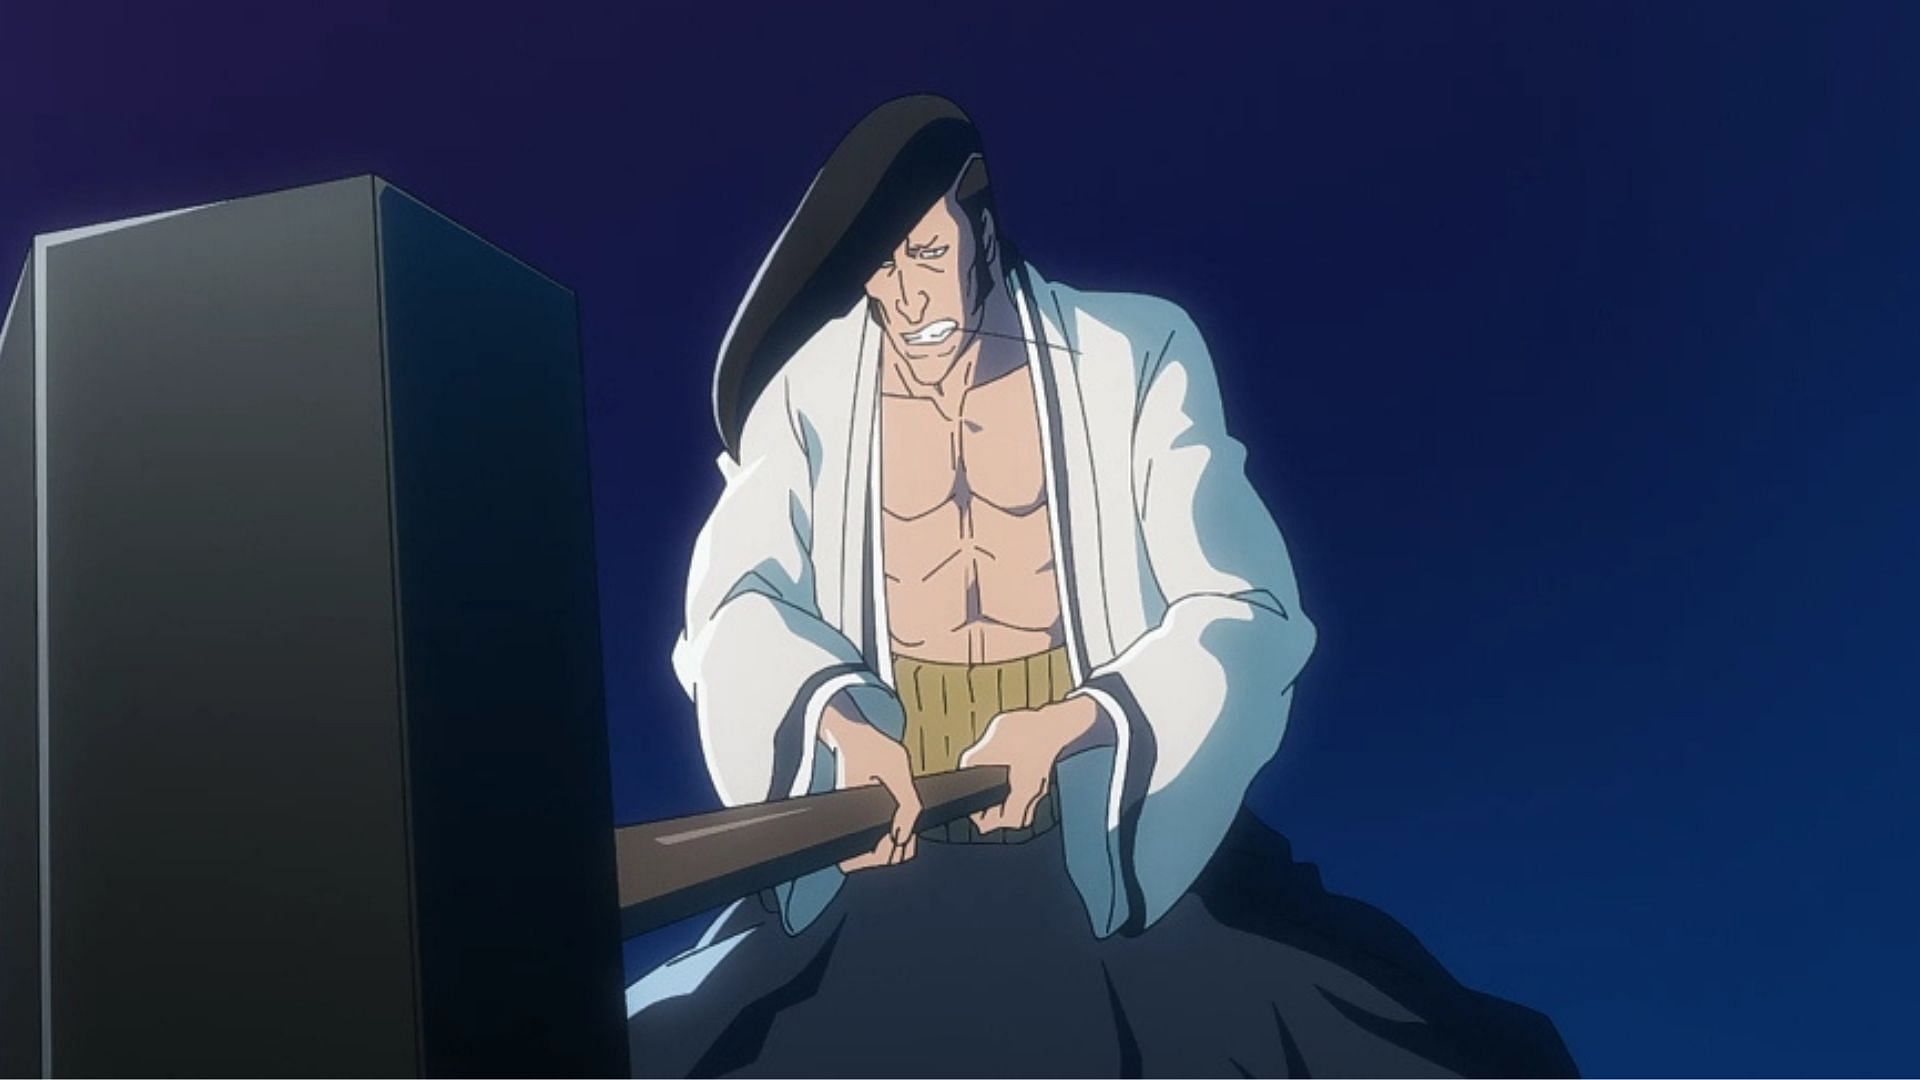 Kirinji as seen in the Bleach anime (image via Studio Pierrot)